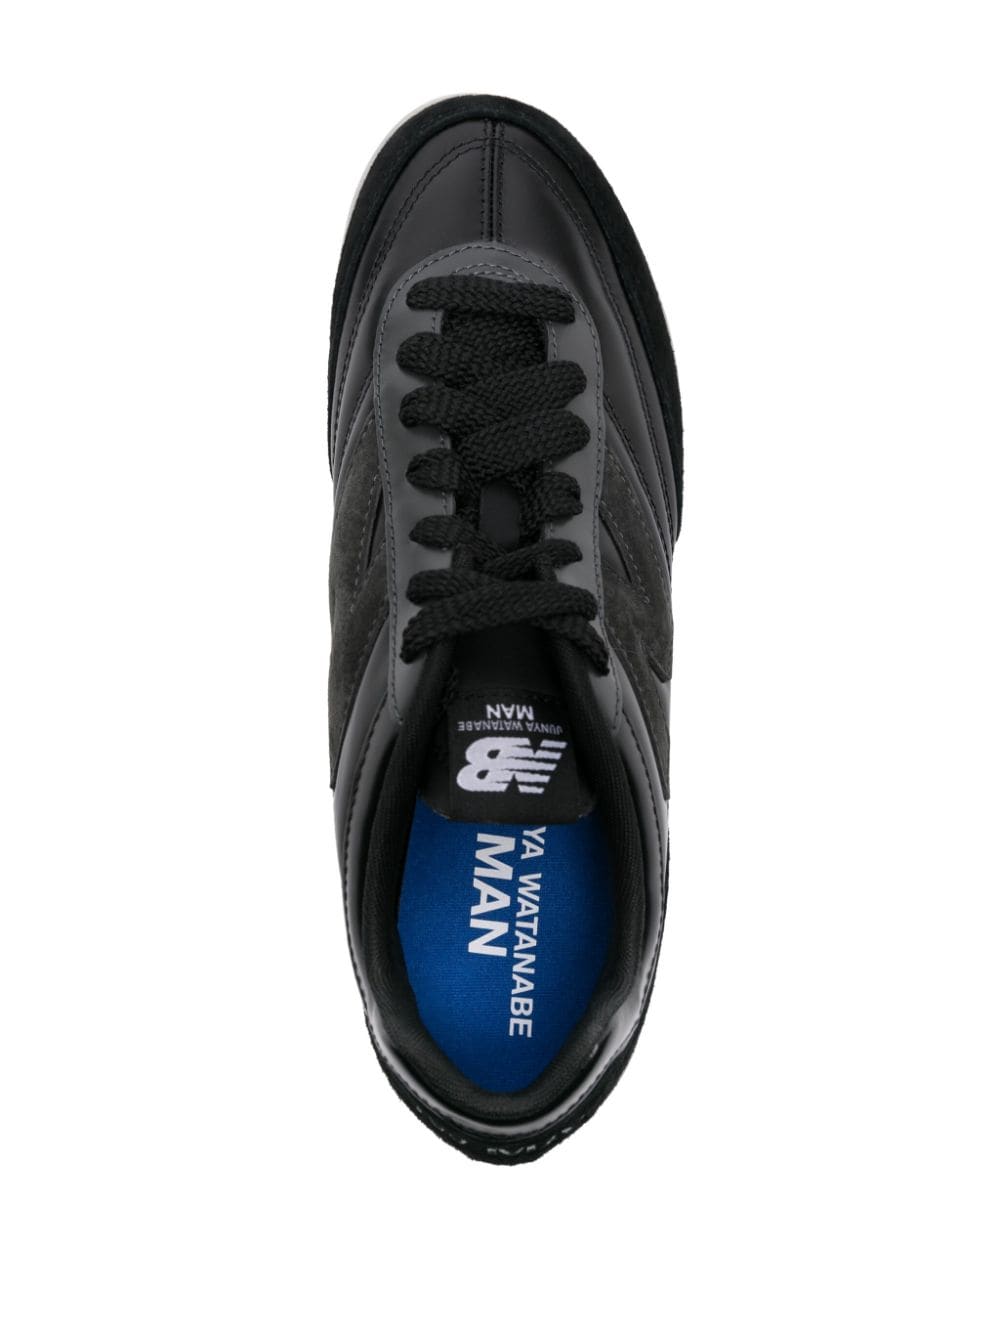 RC42 x New Balance black sneakers